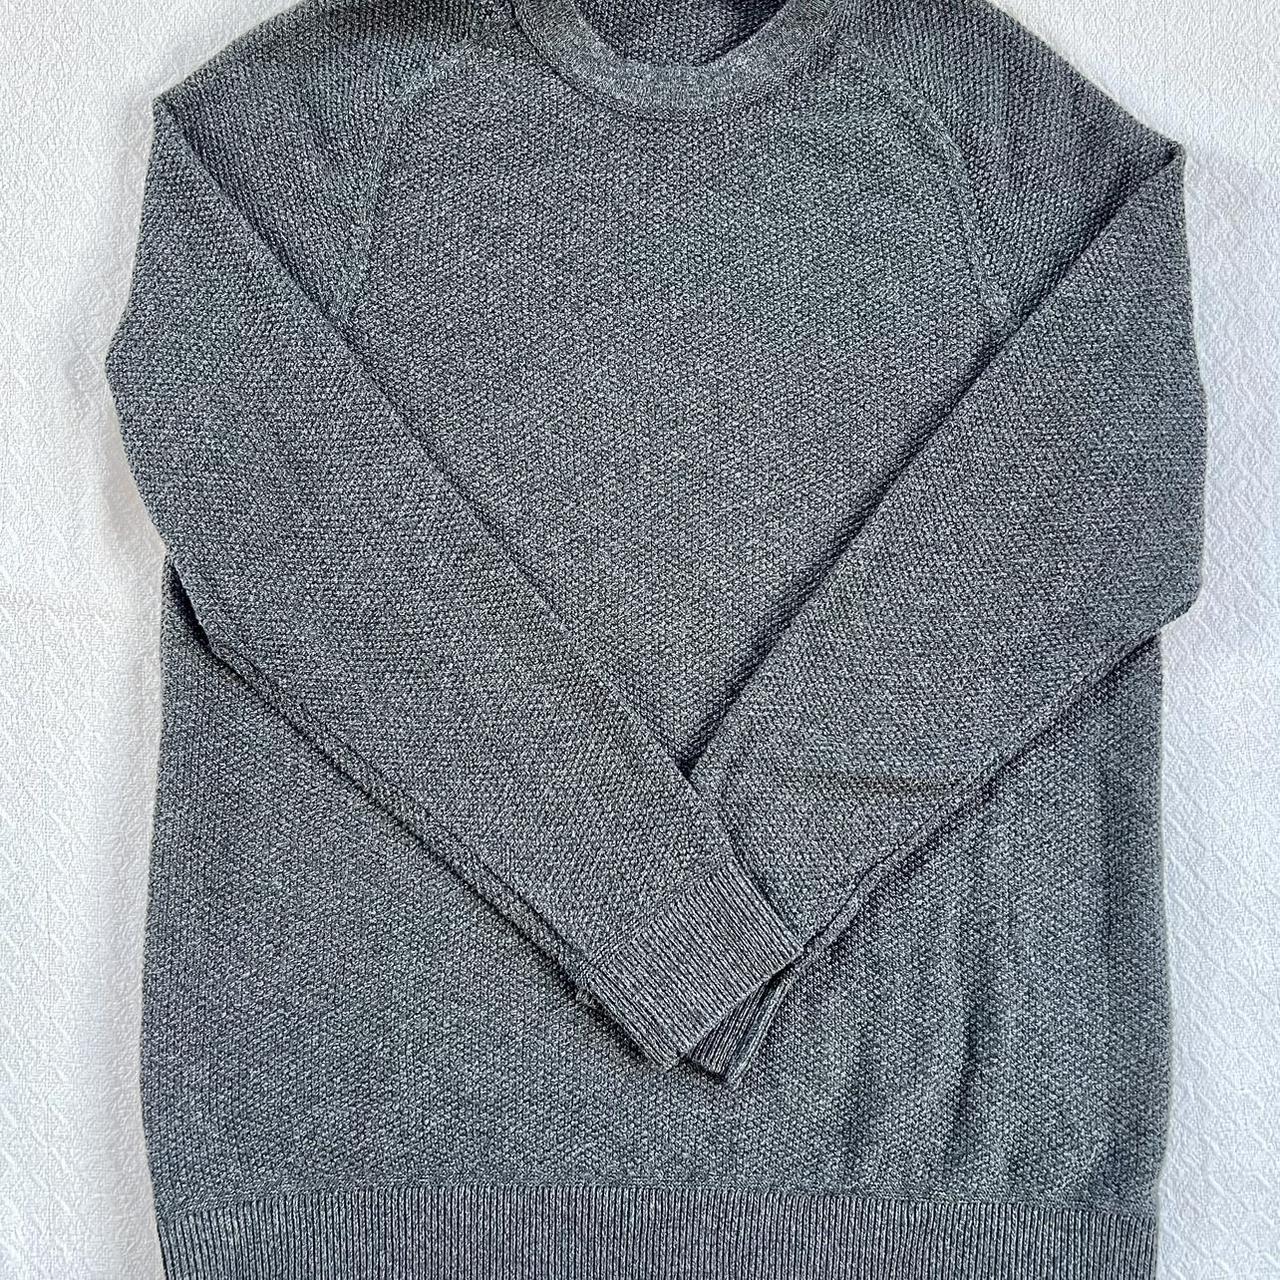 Lululemon pullover-sweater - Depop